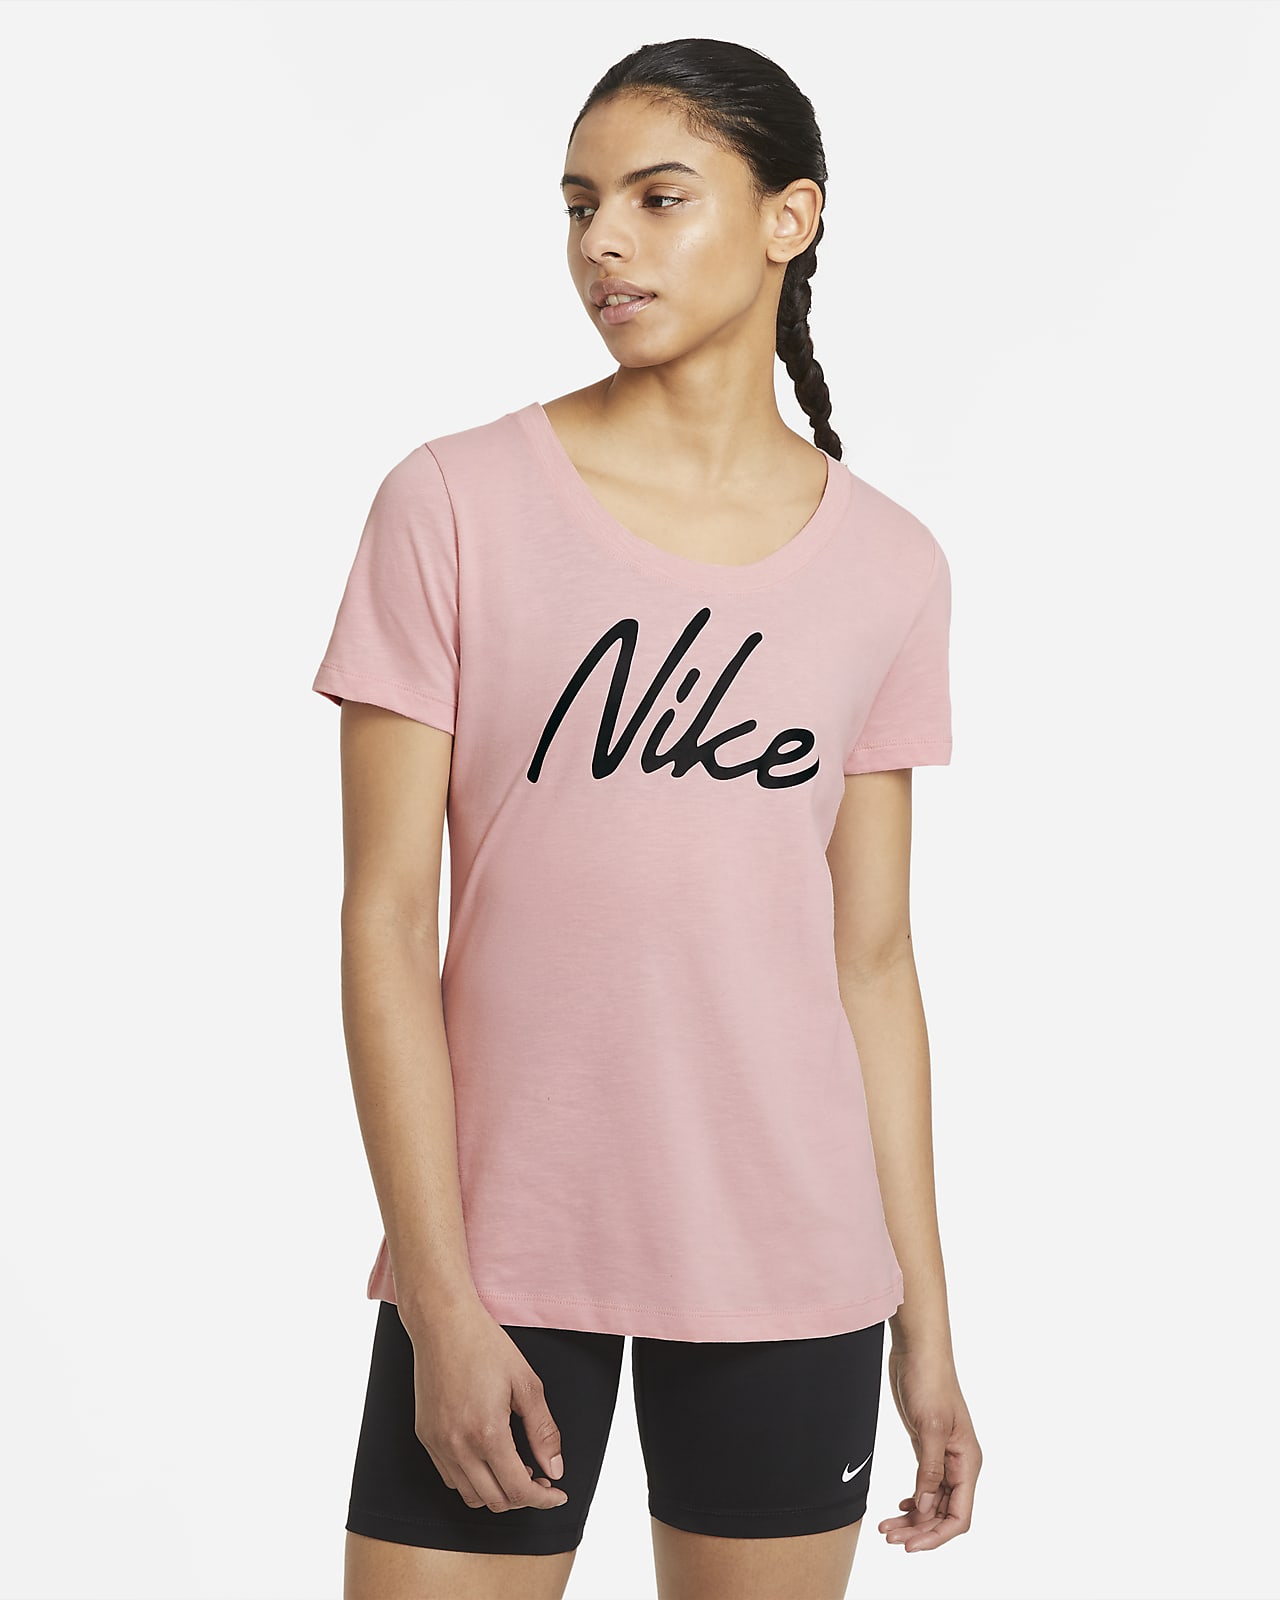 nike dri fit shirts womens sale